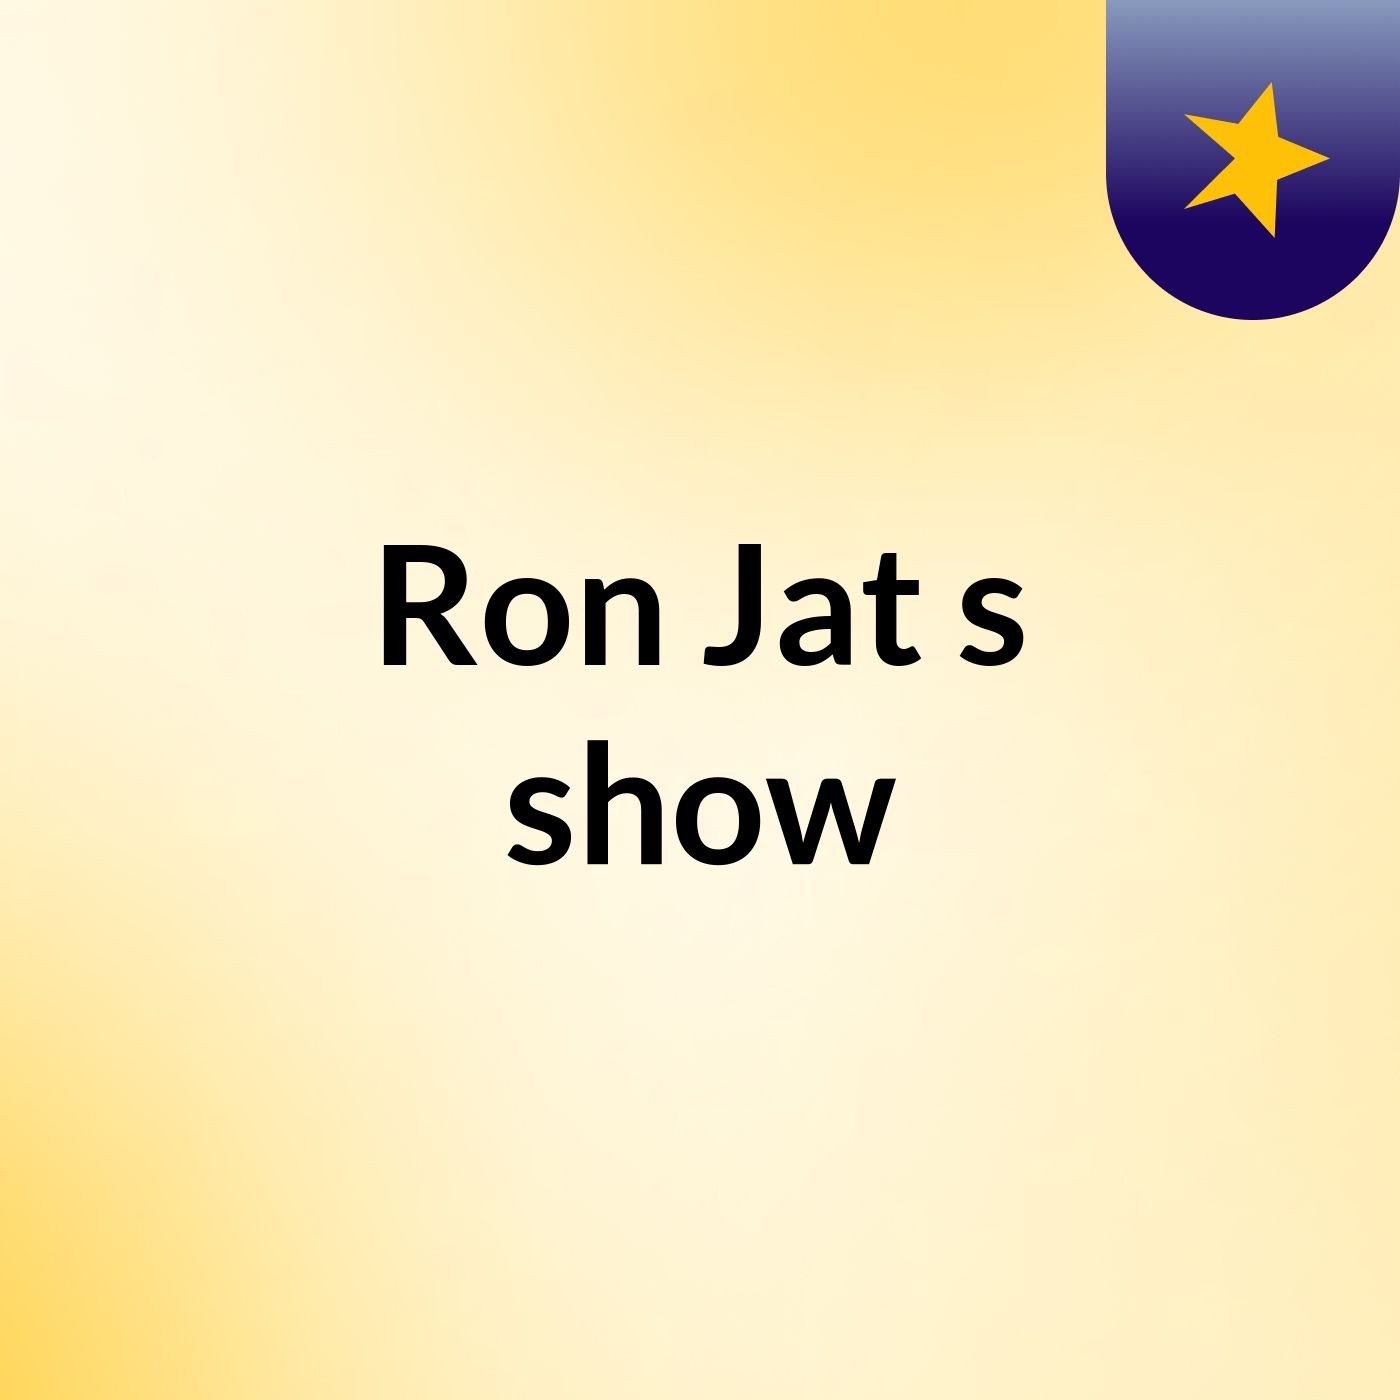 Ron Jat's show